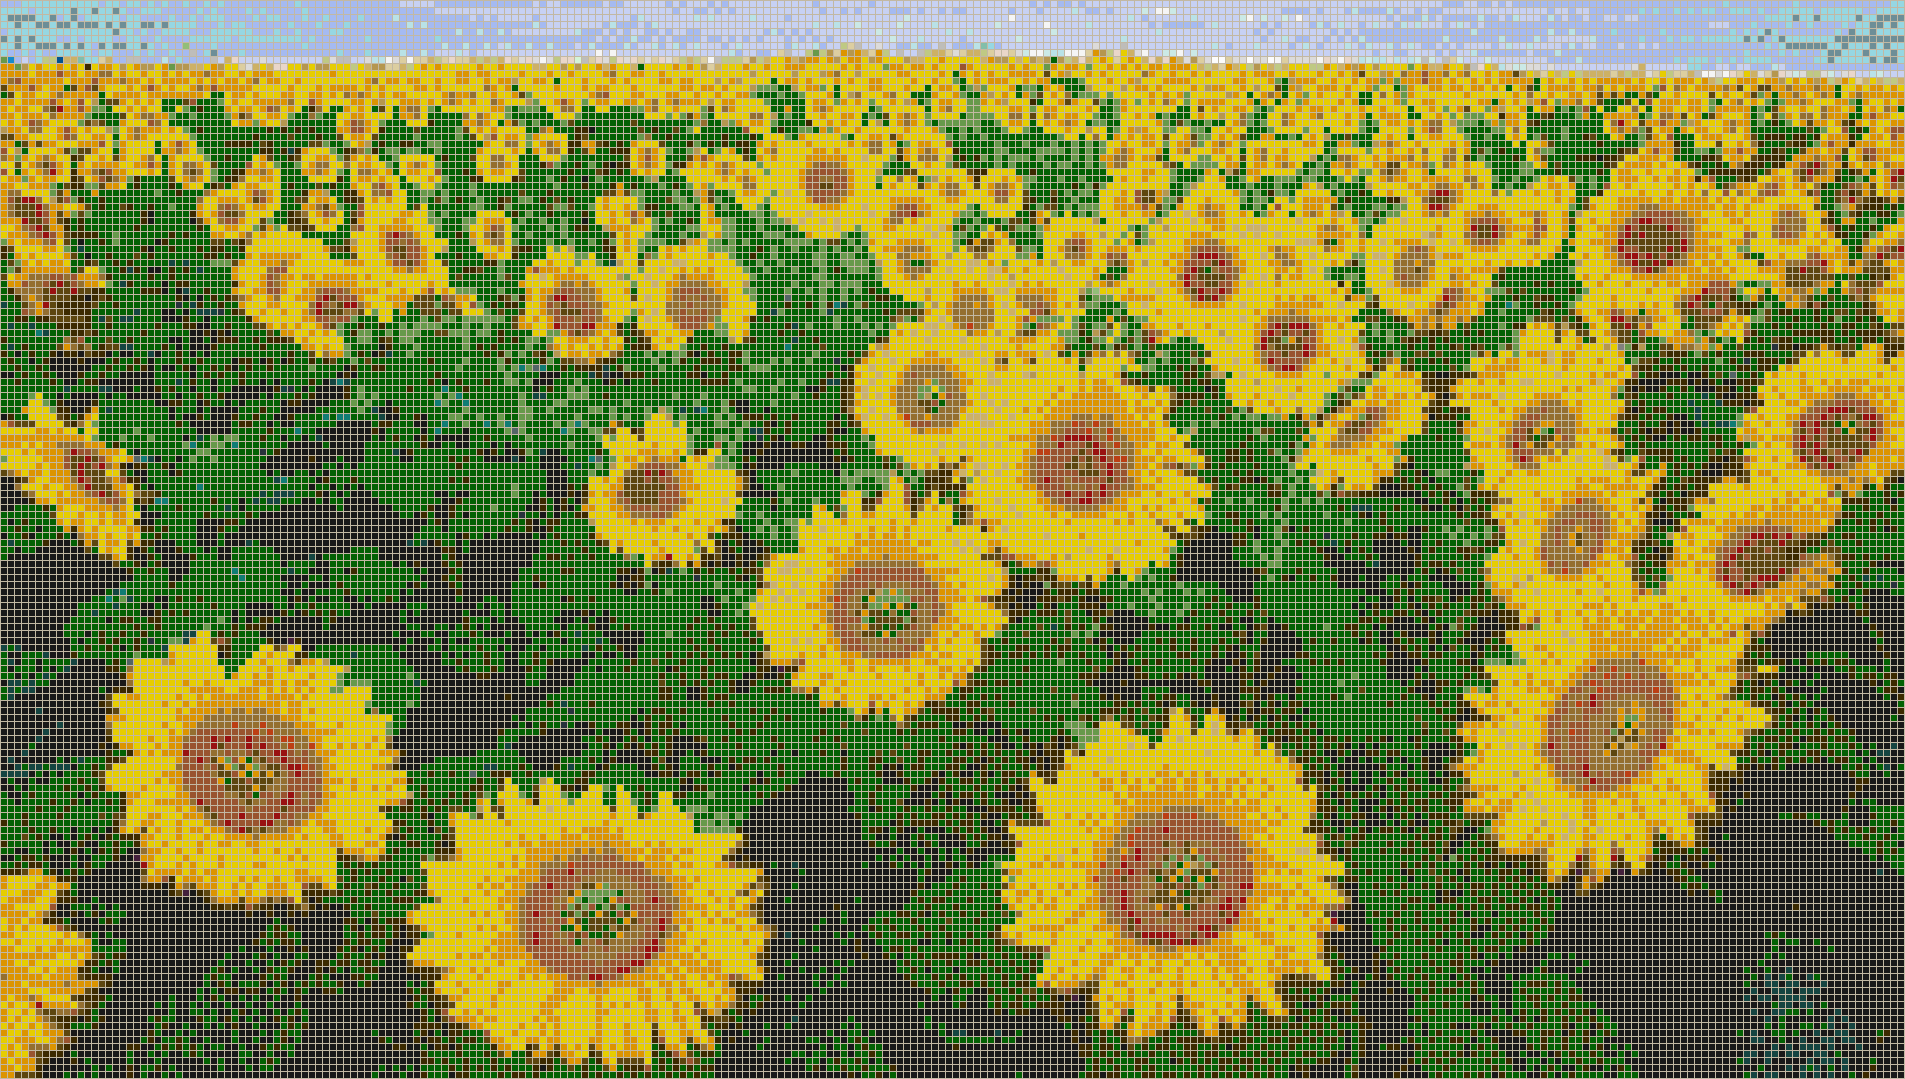 Sunflower Fields - Mosaic Tile Picture Art